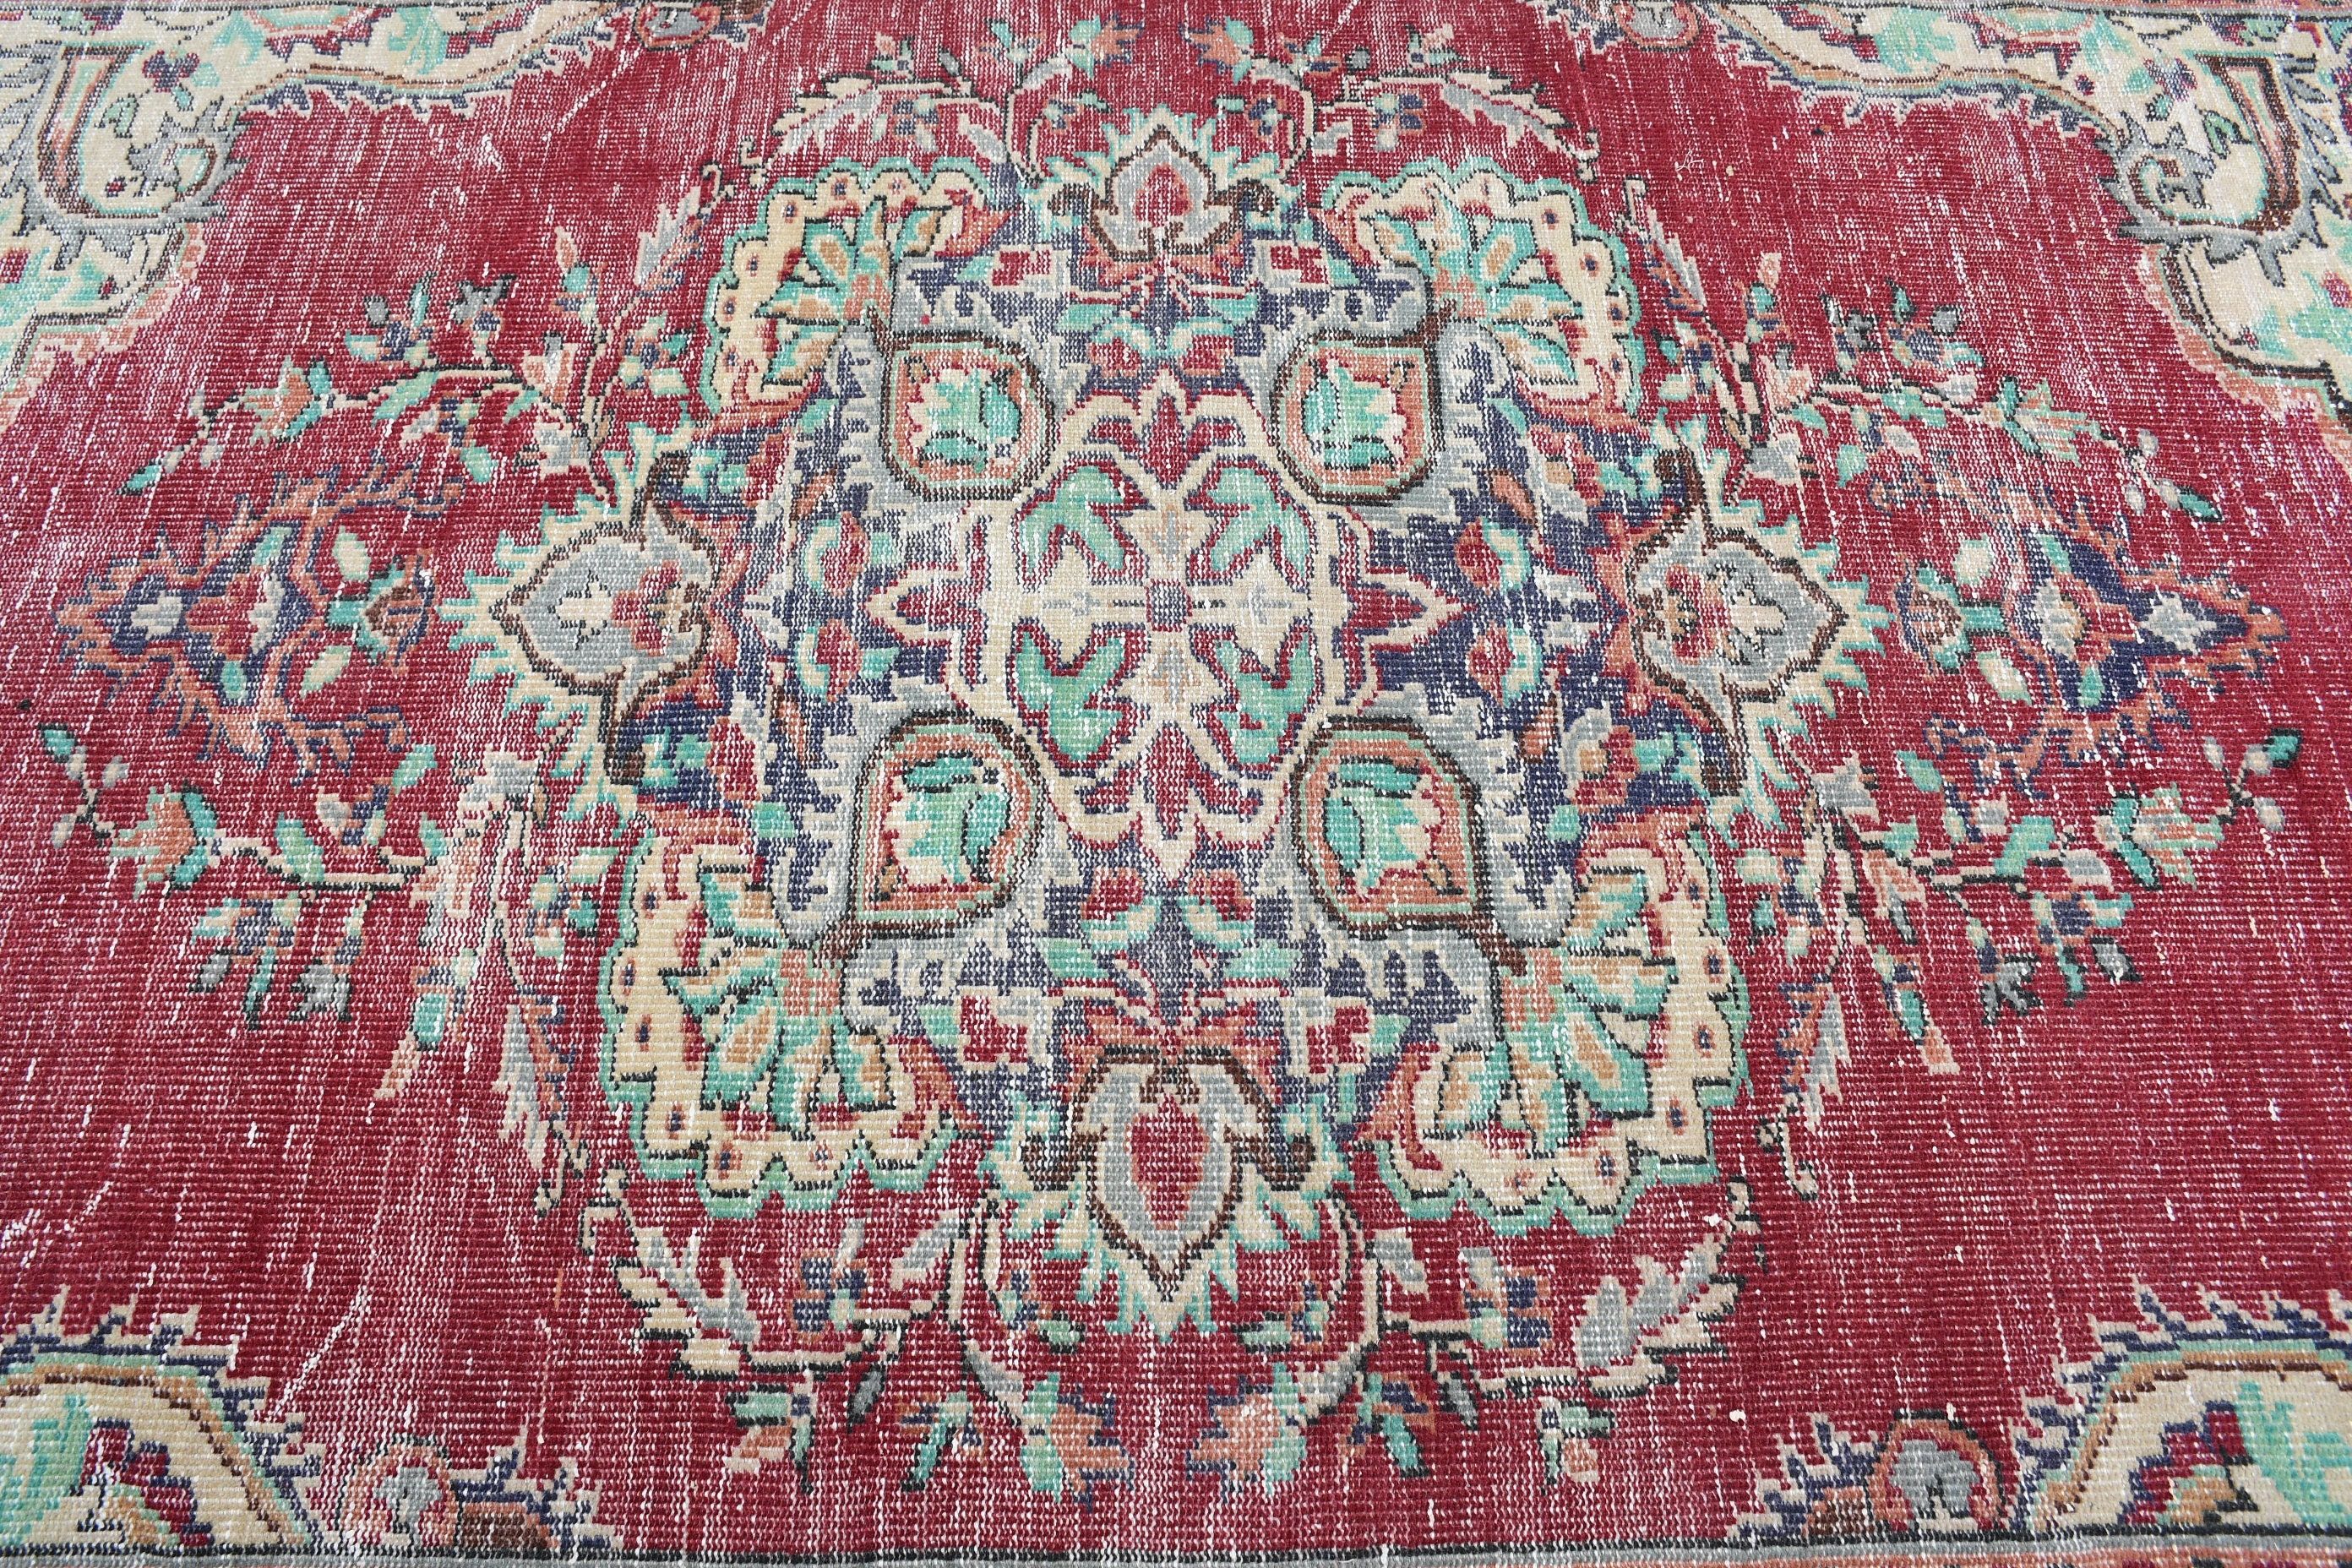 Turkish Rug, Dining Room Rugs, Oriental Rug, Red Wool Rug, Kitchen Rug, Rugs for Bedroom, Bedroom Rug, Vintage Rug, 6.1x9.4 ft Large Rug